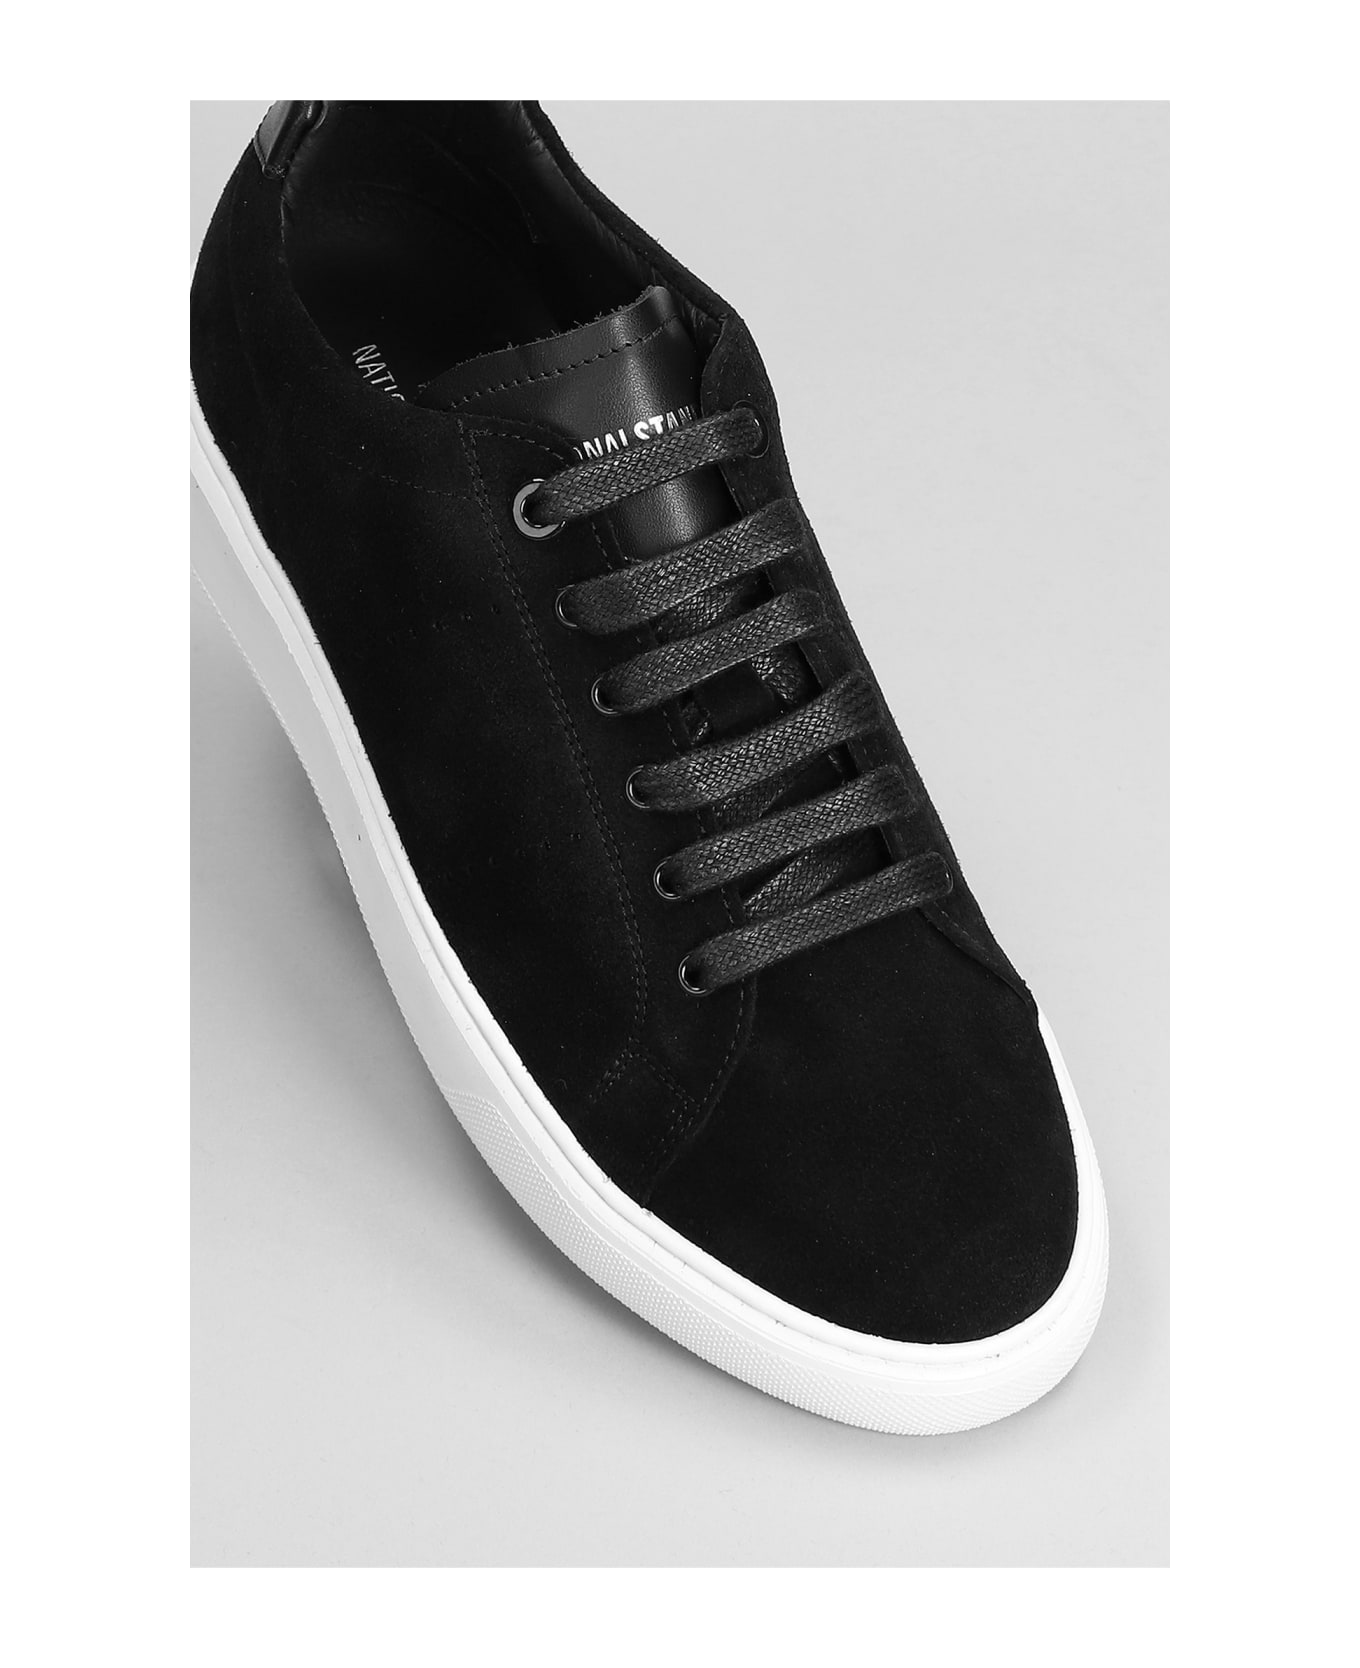 National Standard Edition 9 Sneakers In Black Suede - black